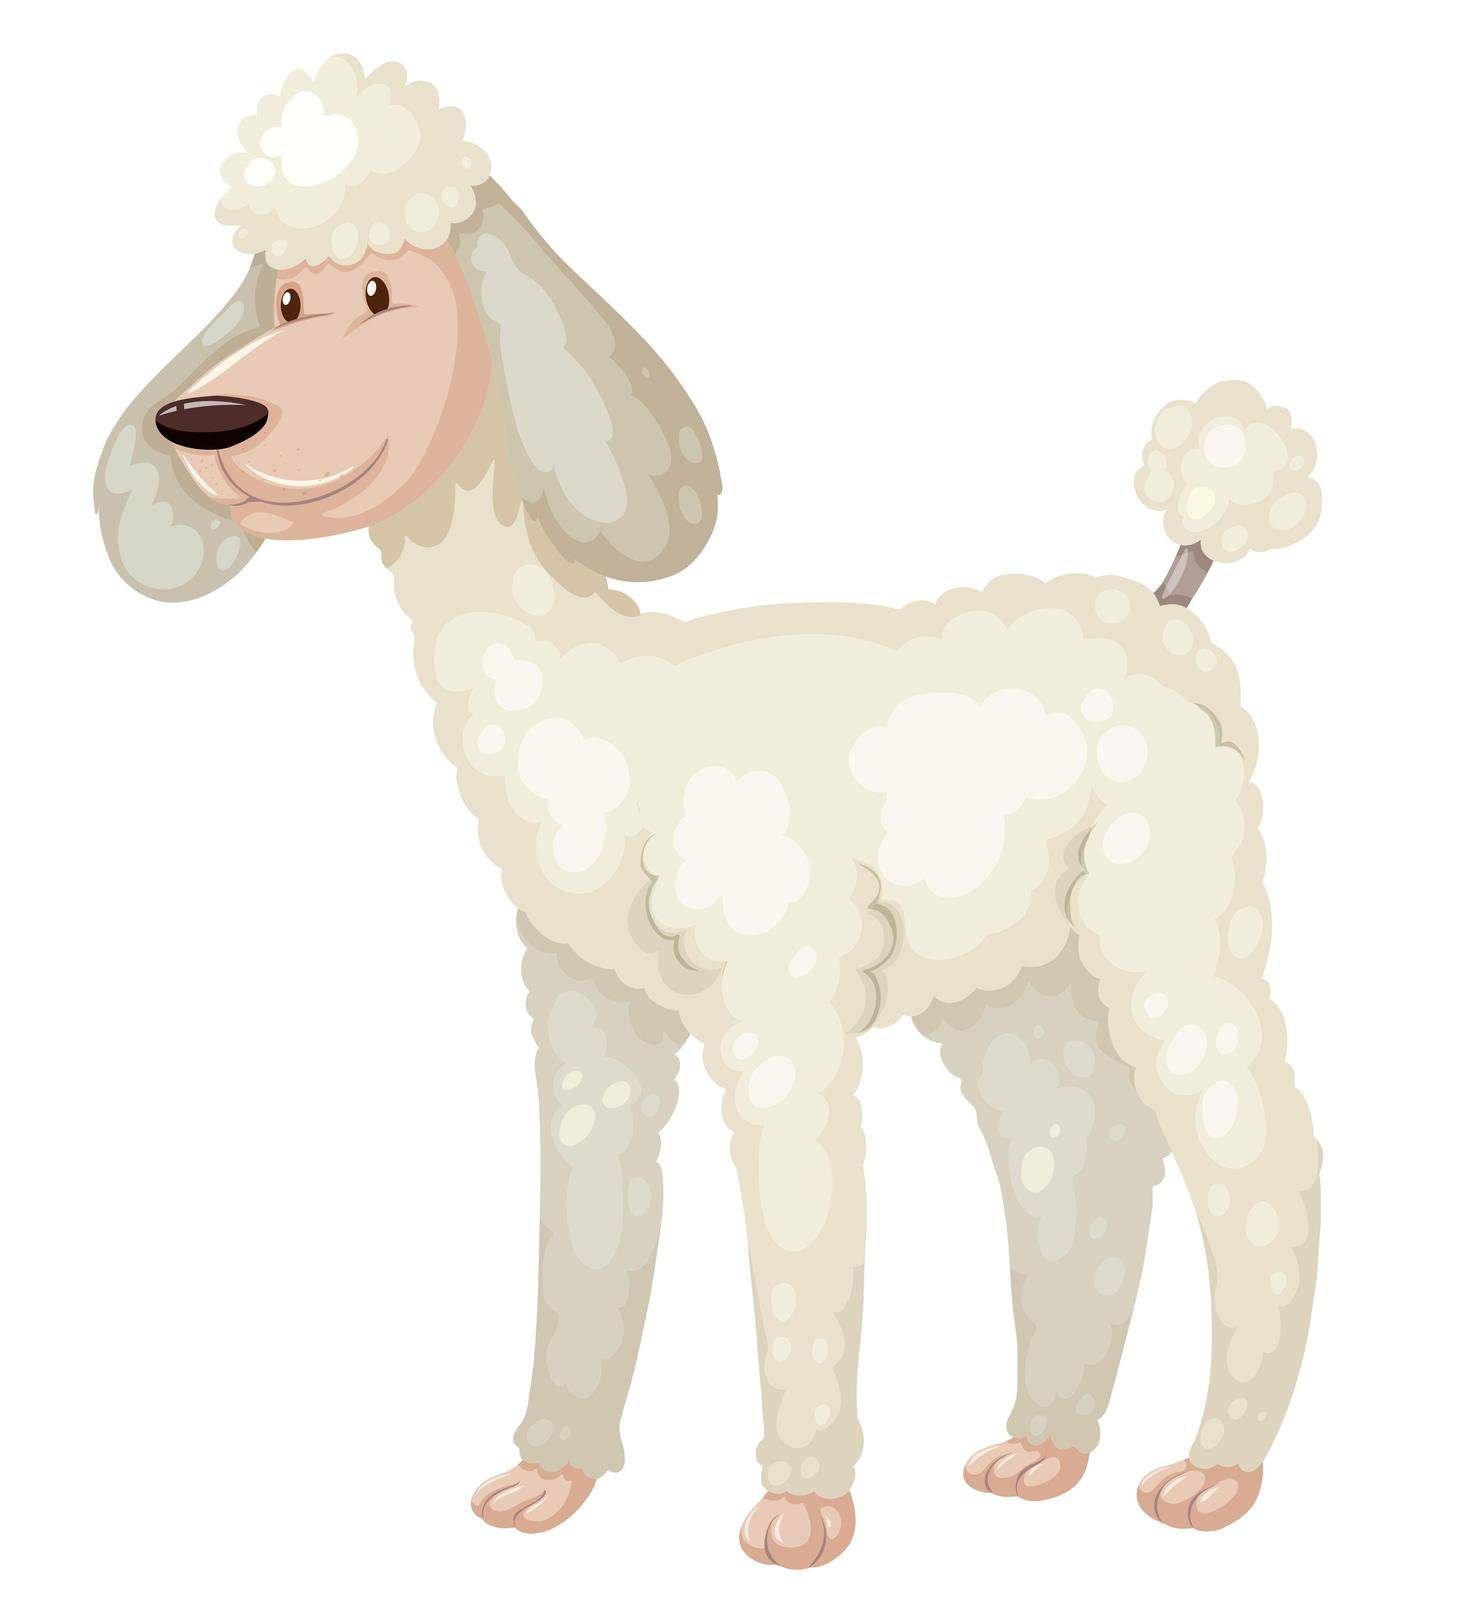 Poodle dog with white fur illustration